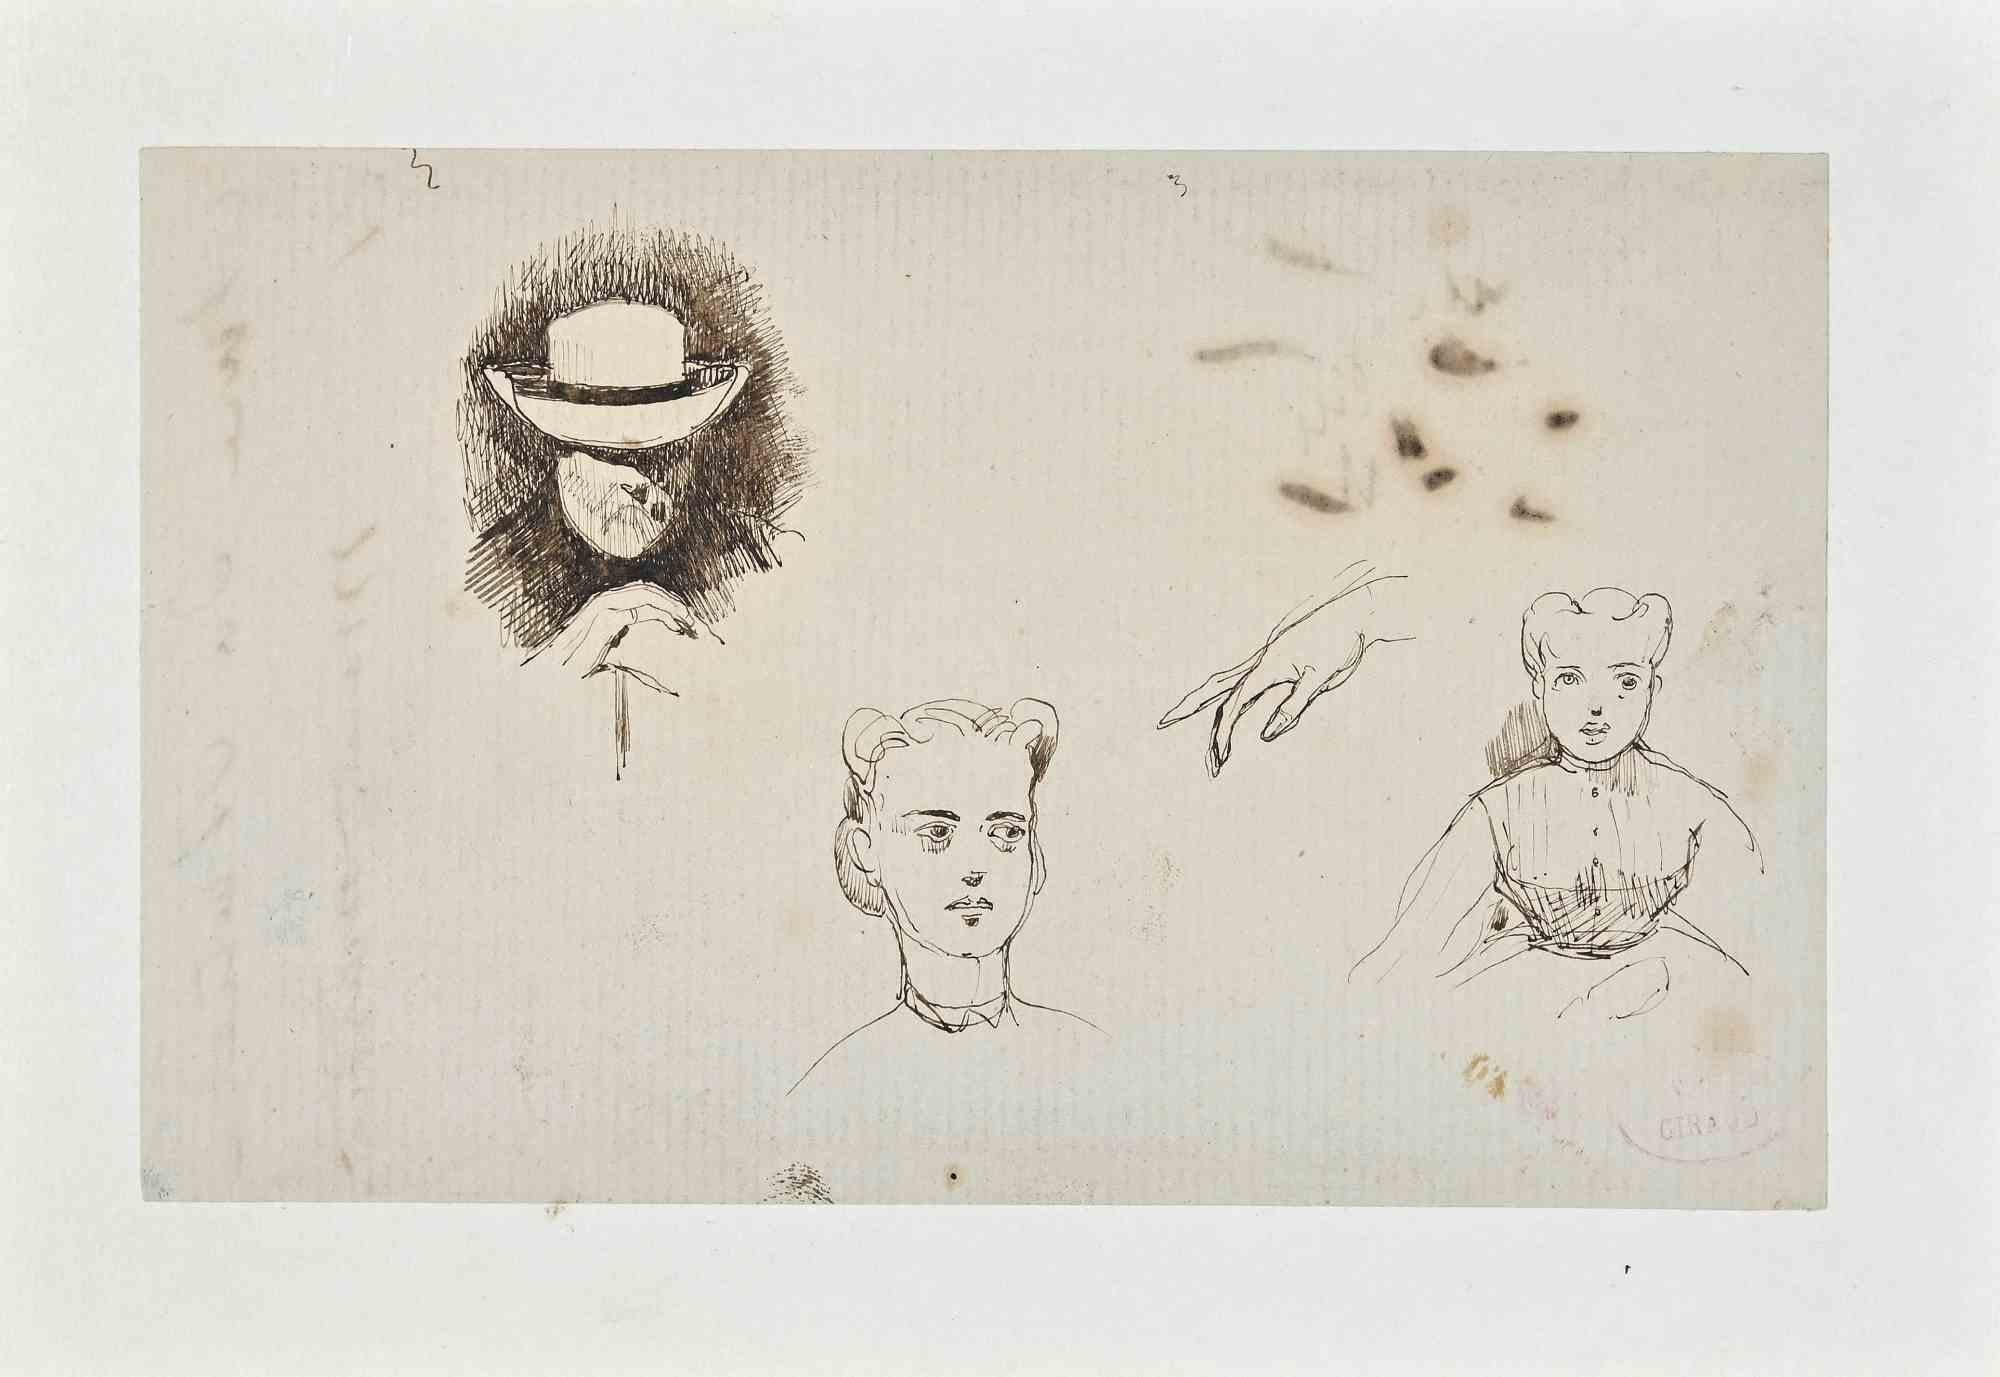 Eugène Giraud Figurative Art - The Figures - Original Drawing on Paper by E. Giraud - Mid 20th Century